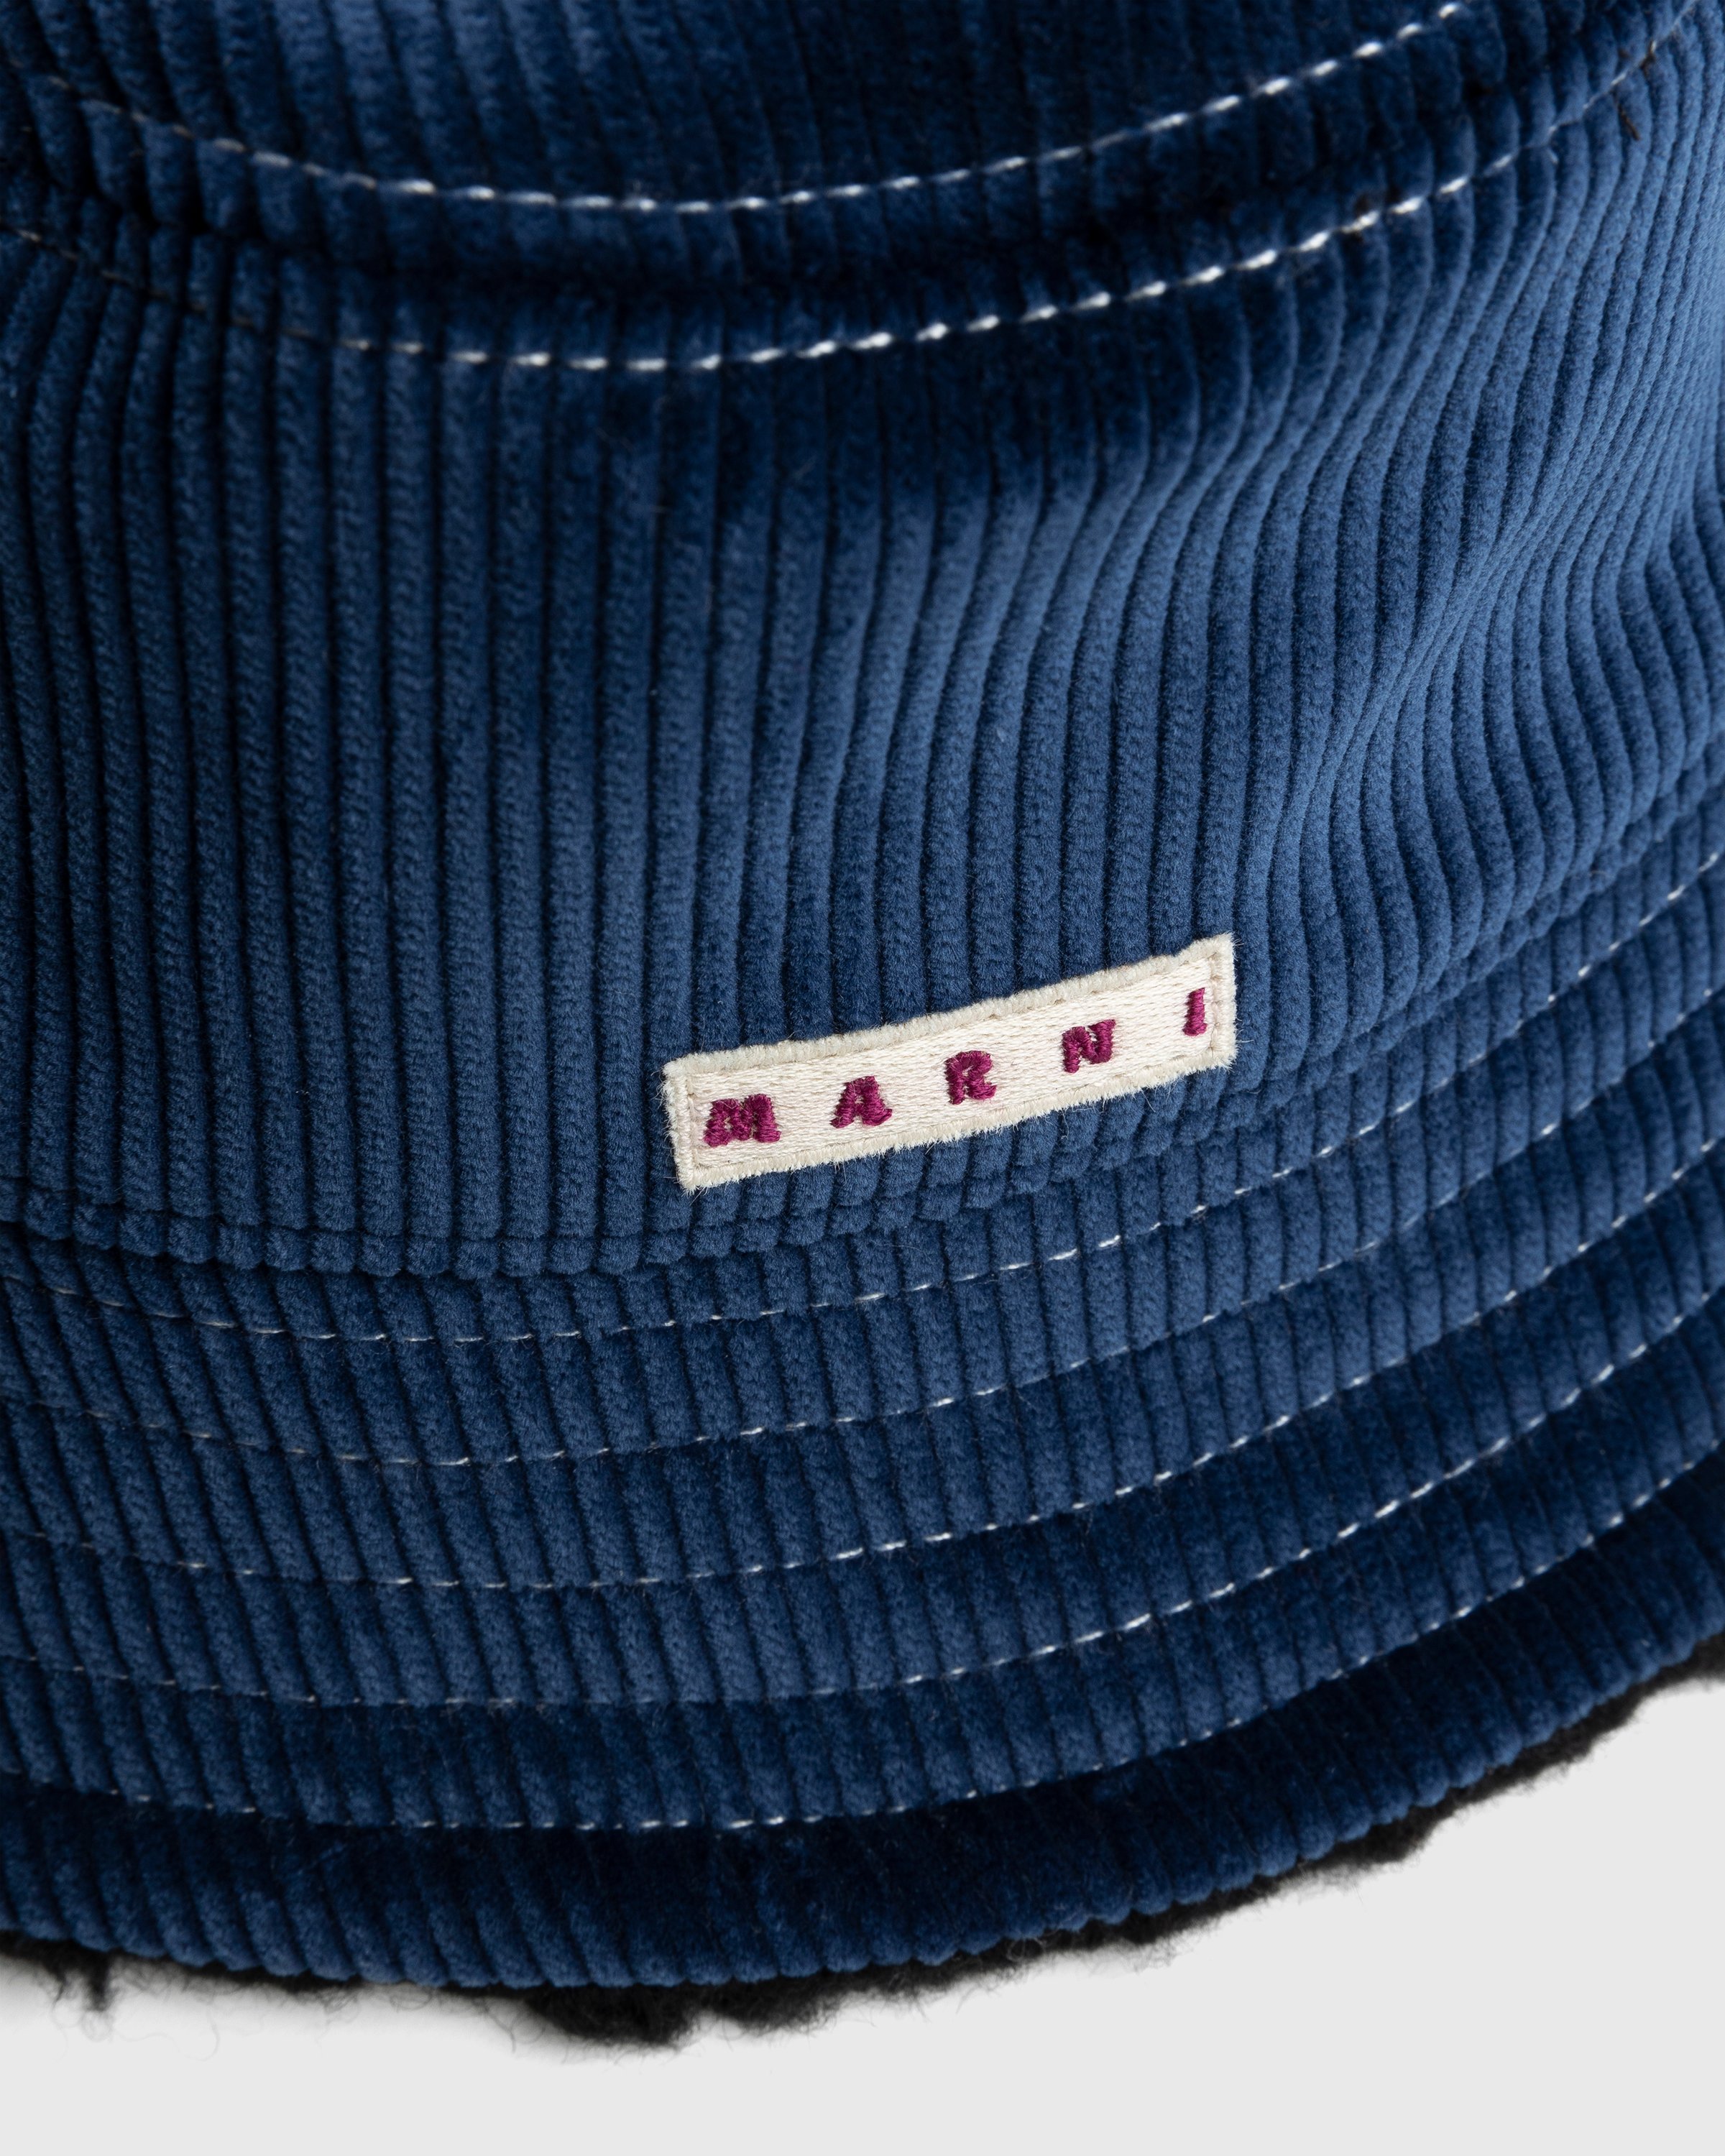 Marni - Bucket Hat Blue - Accessories - Blue - Image 3